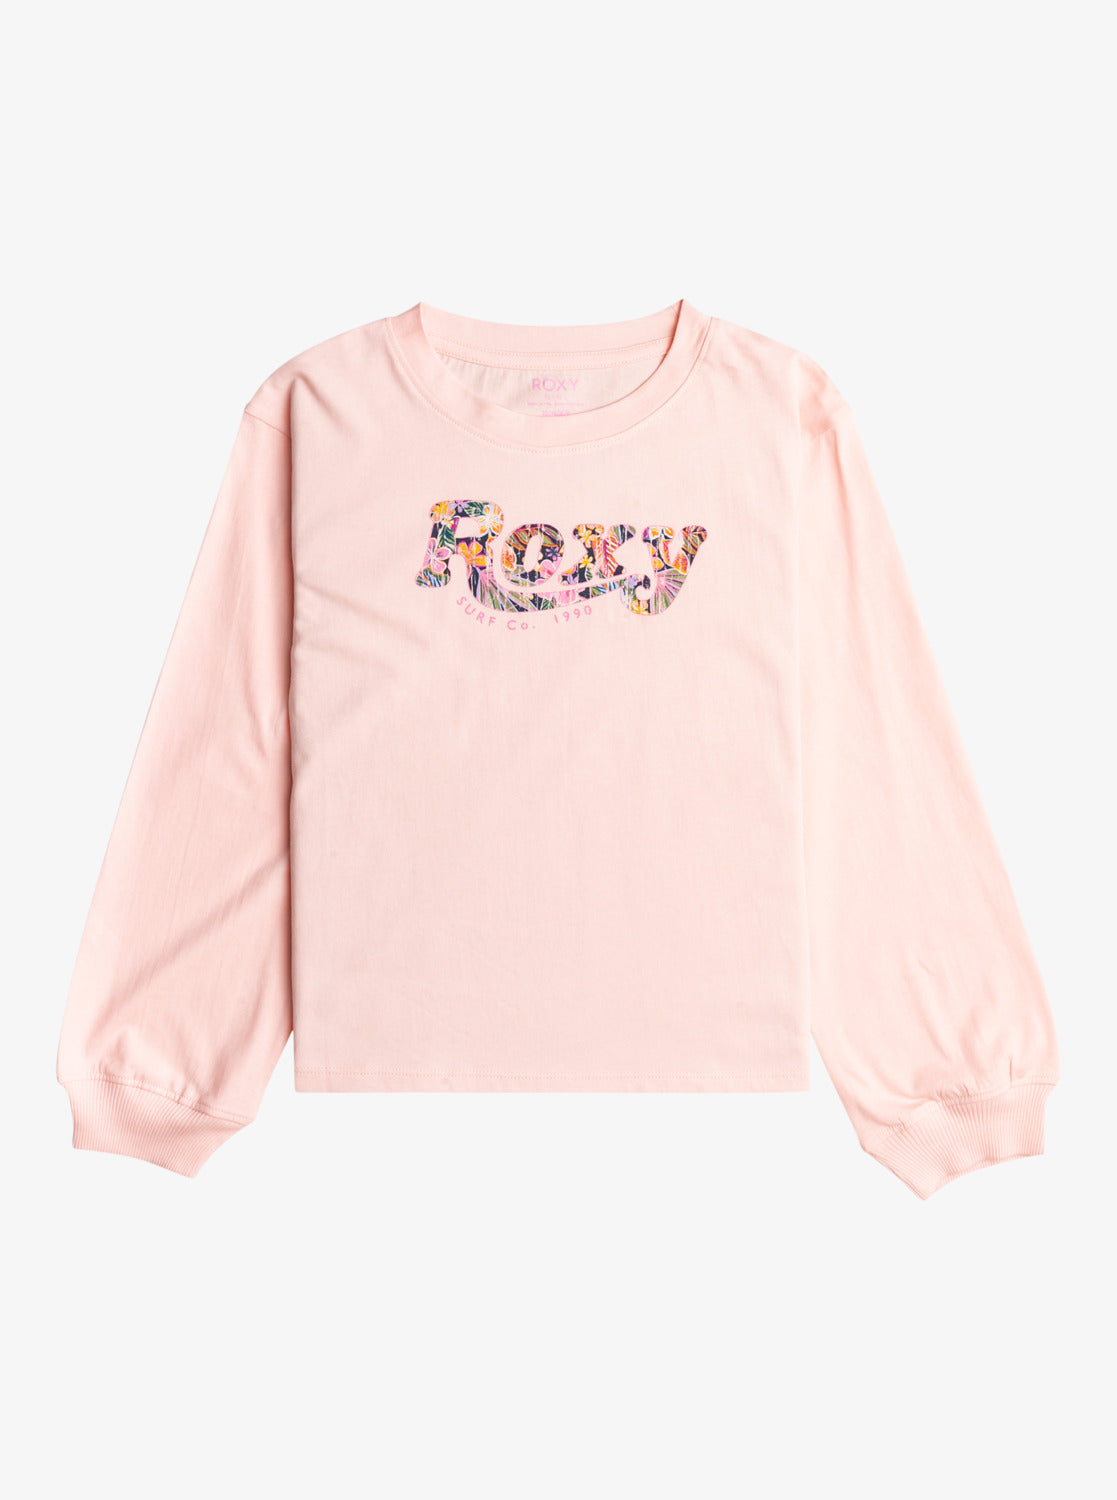 Roxy Let Somebody Go Camiseta Manga Larga Niña